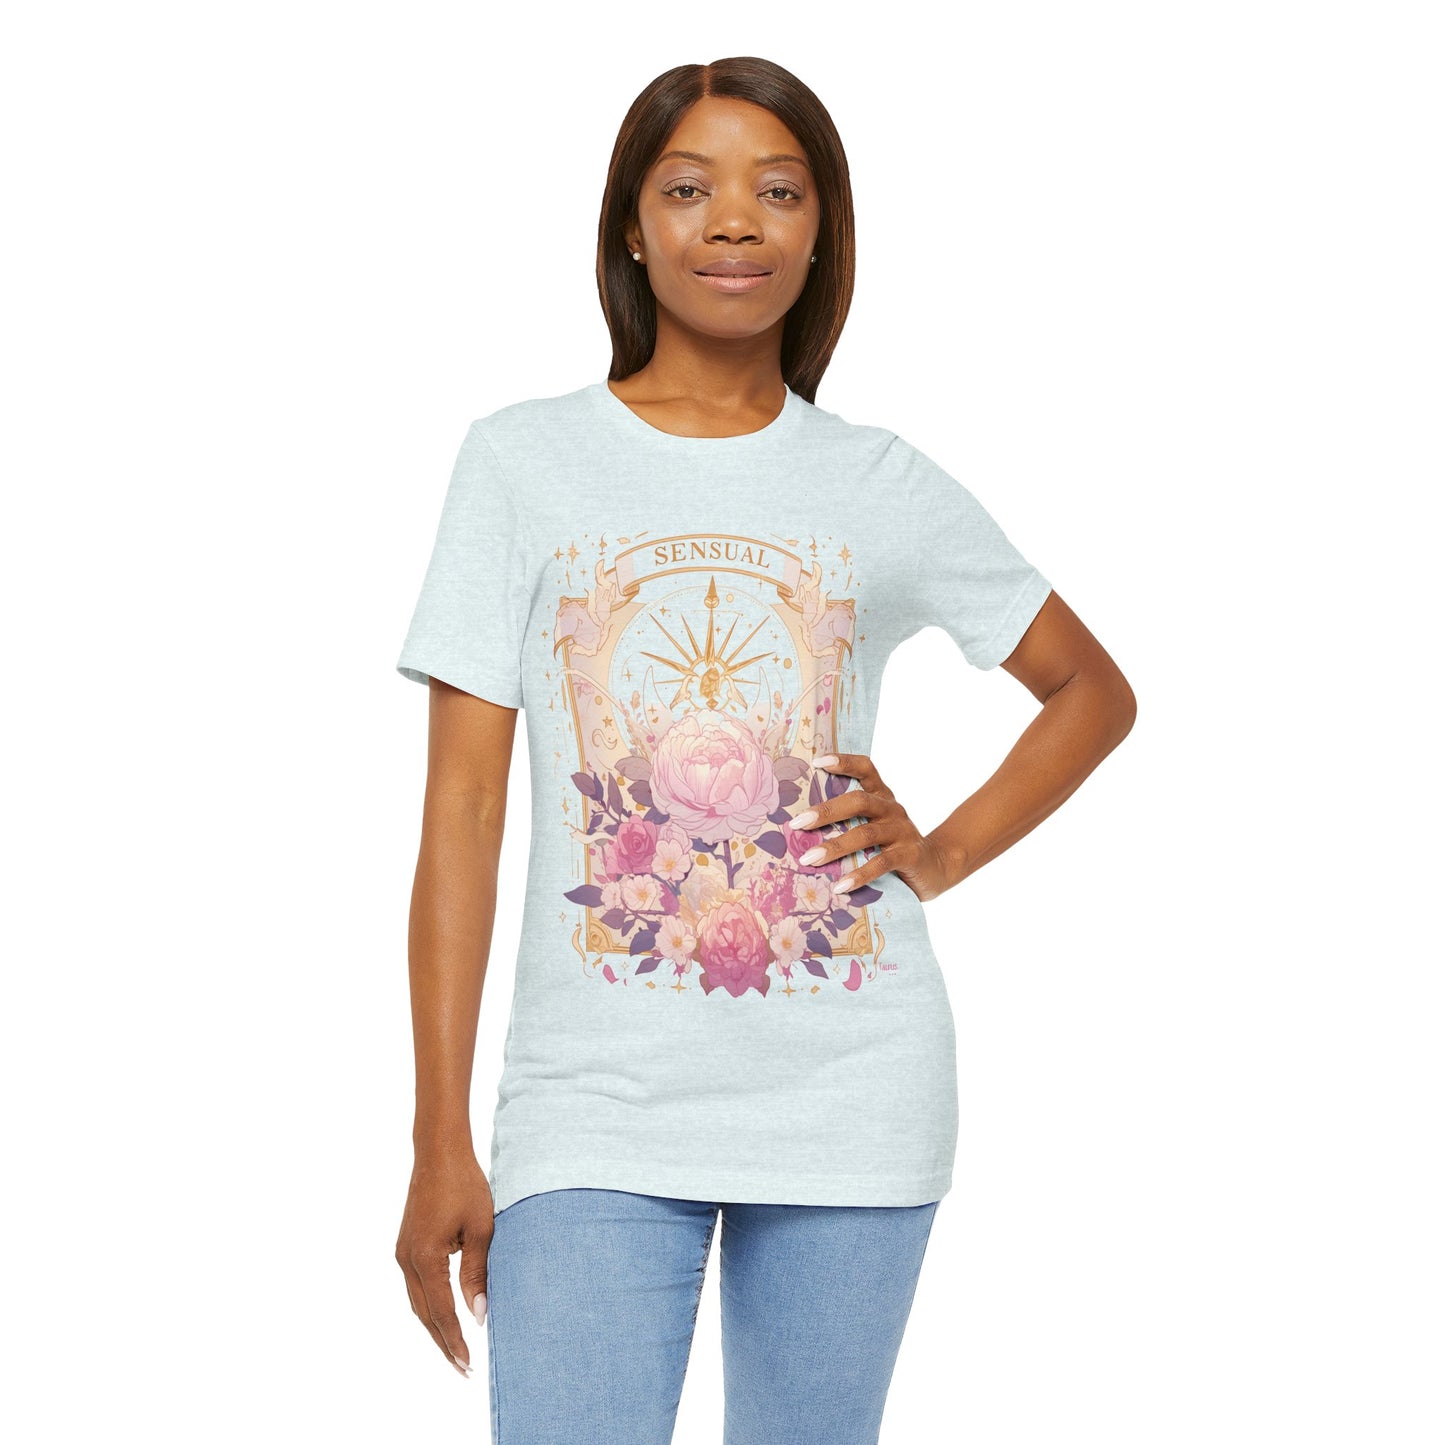 Astrological Taurus: The Sensual Venus T-Shirt